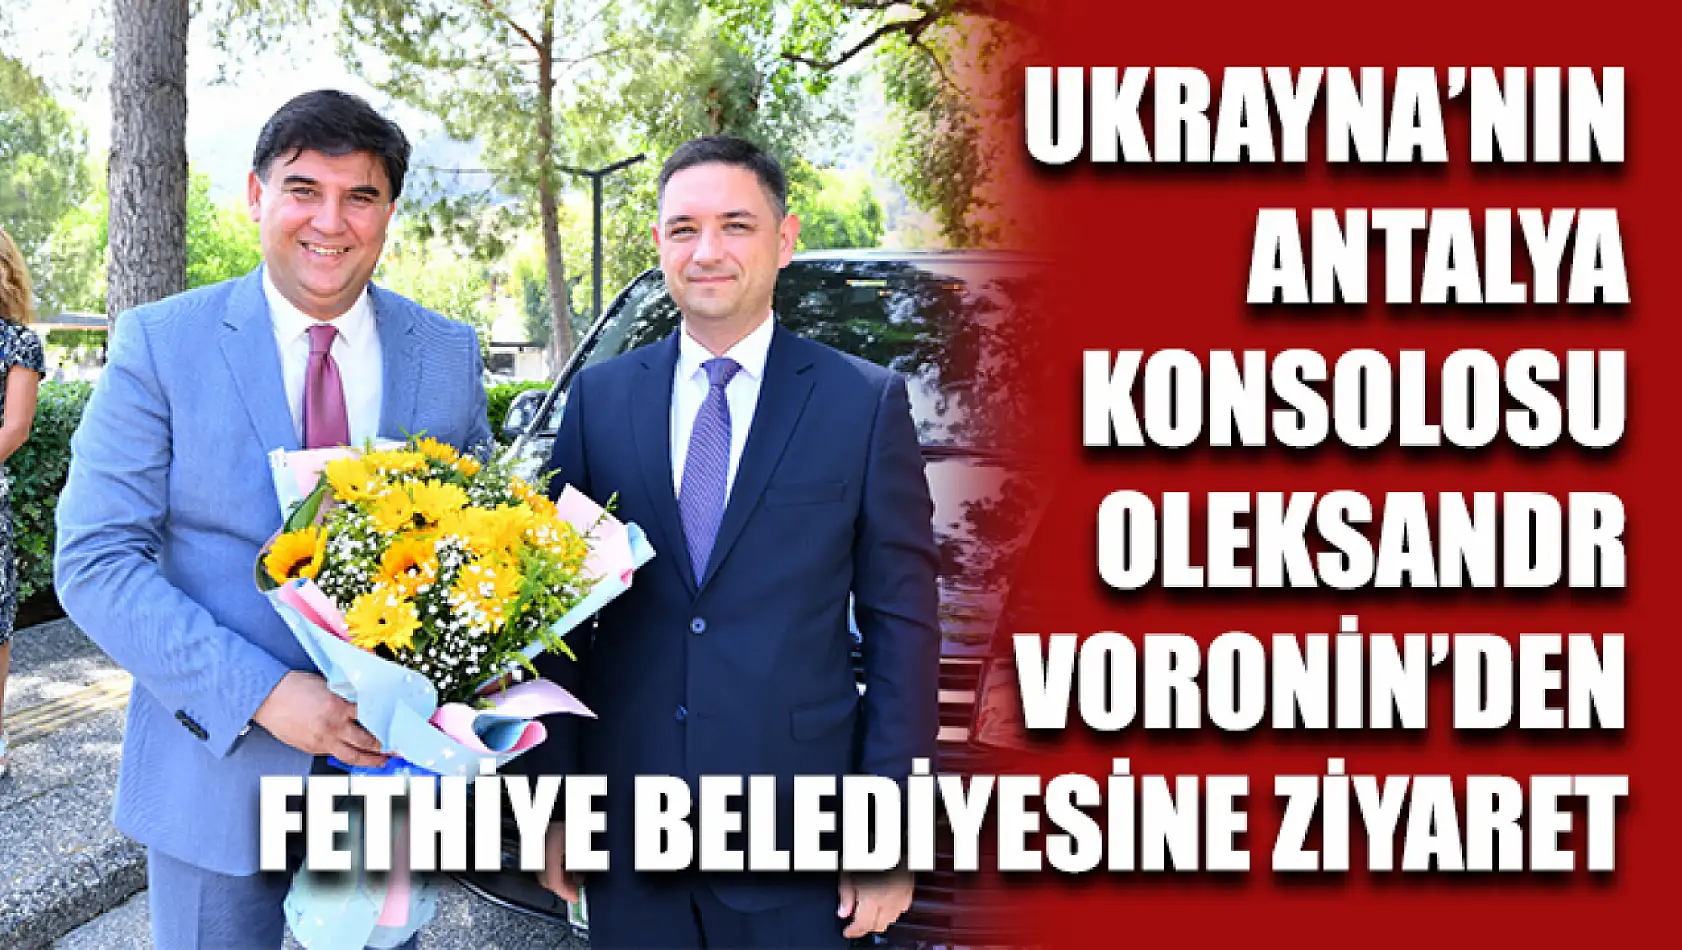 Ukrayna'nın Antalya Konsolosu Oleksandr Voronin'den Fethiye Belediyesine Ziyaret